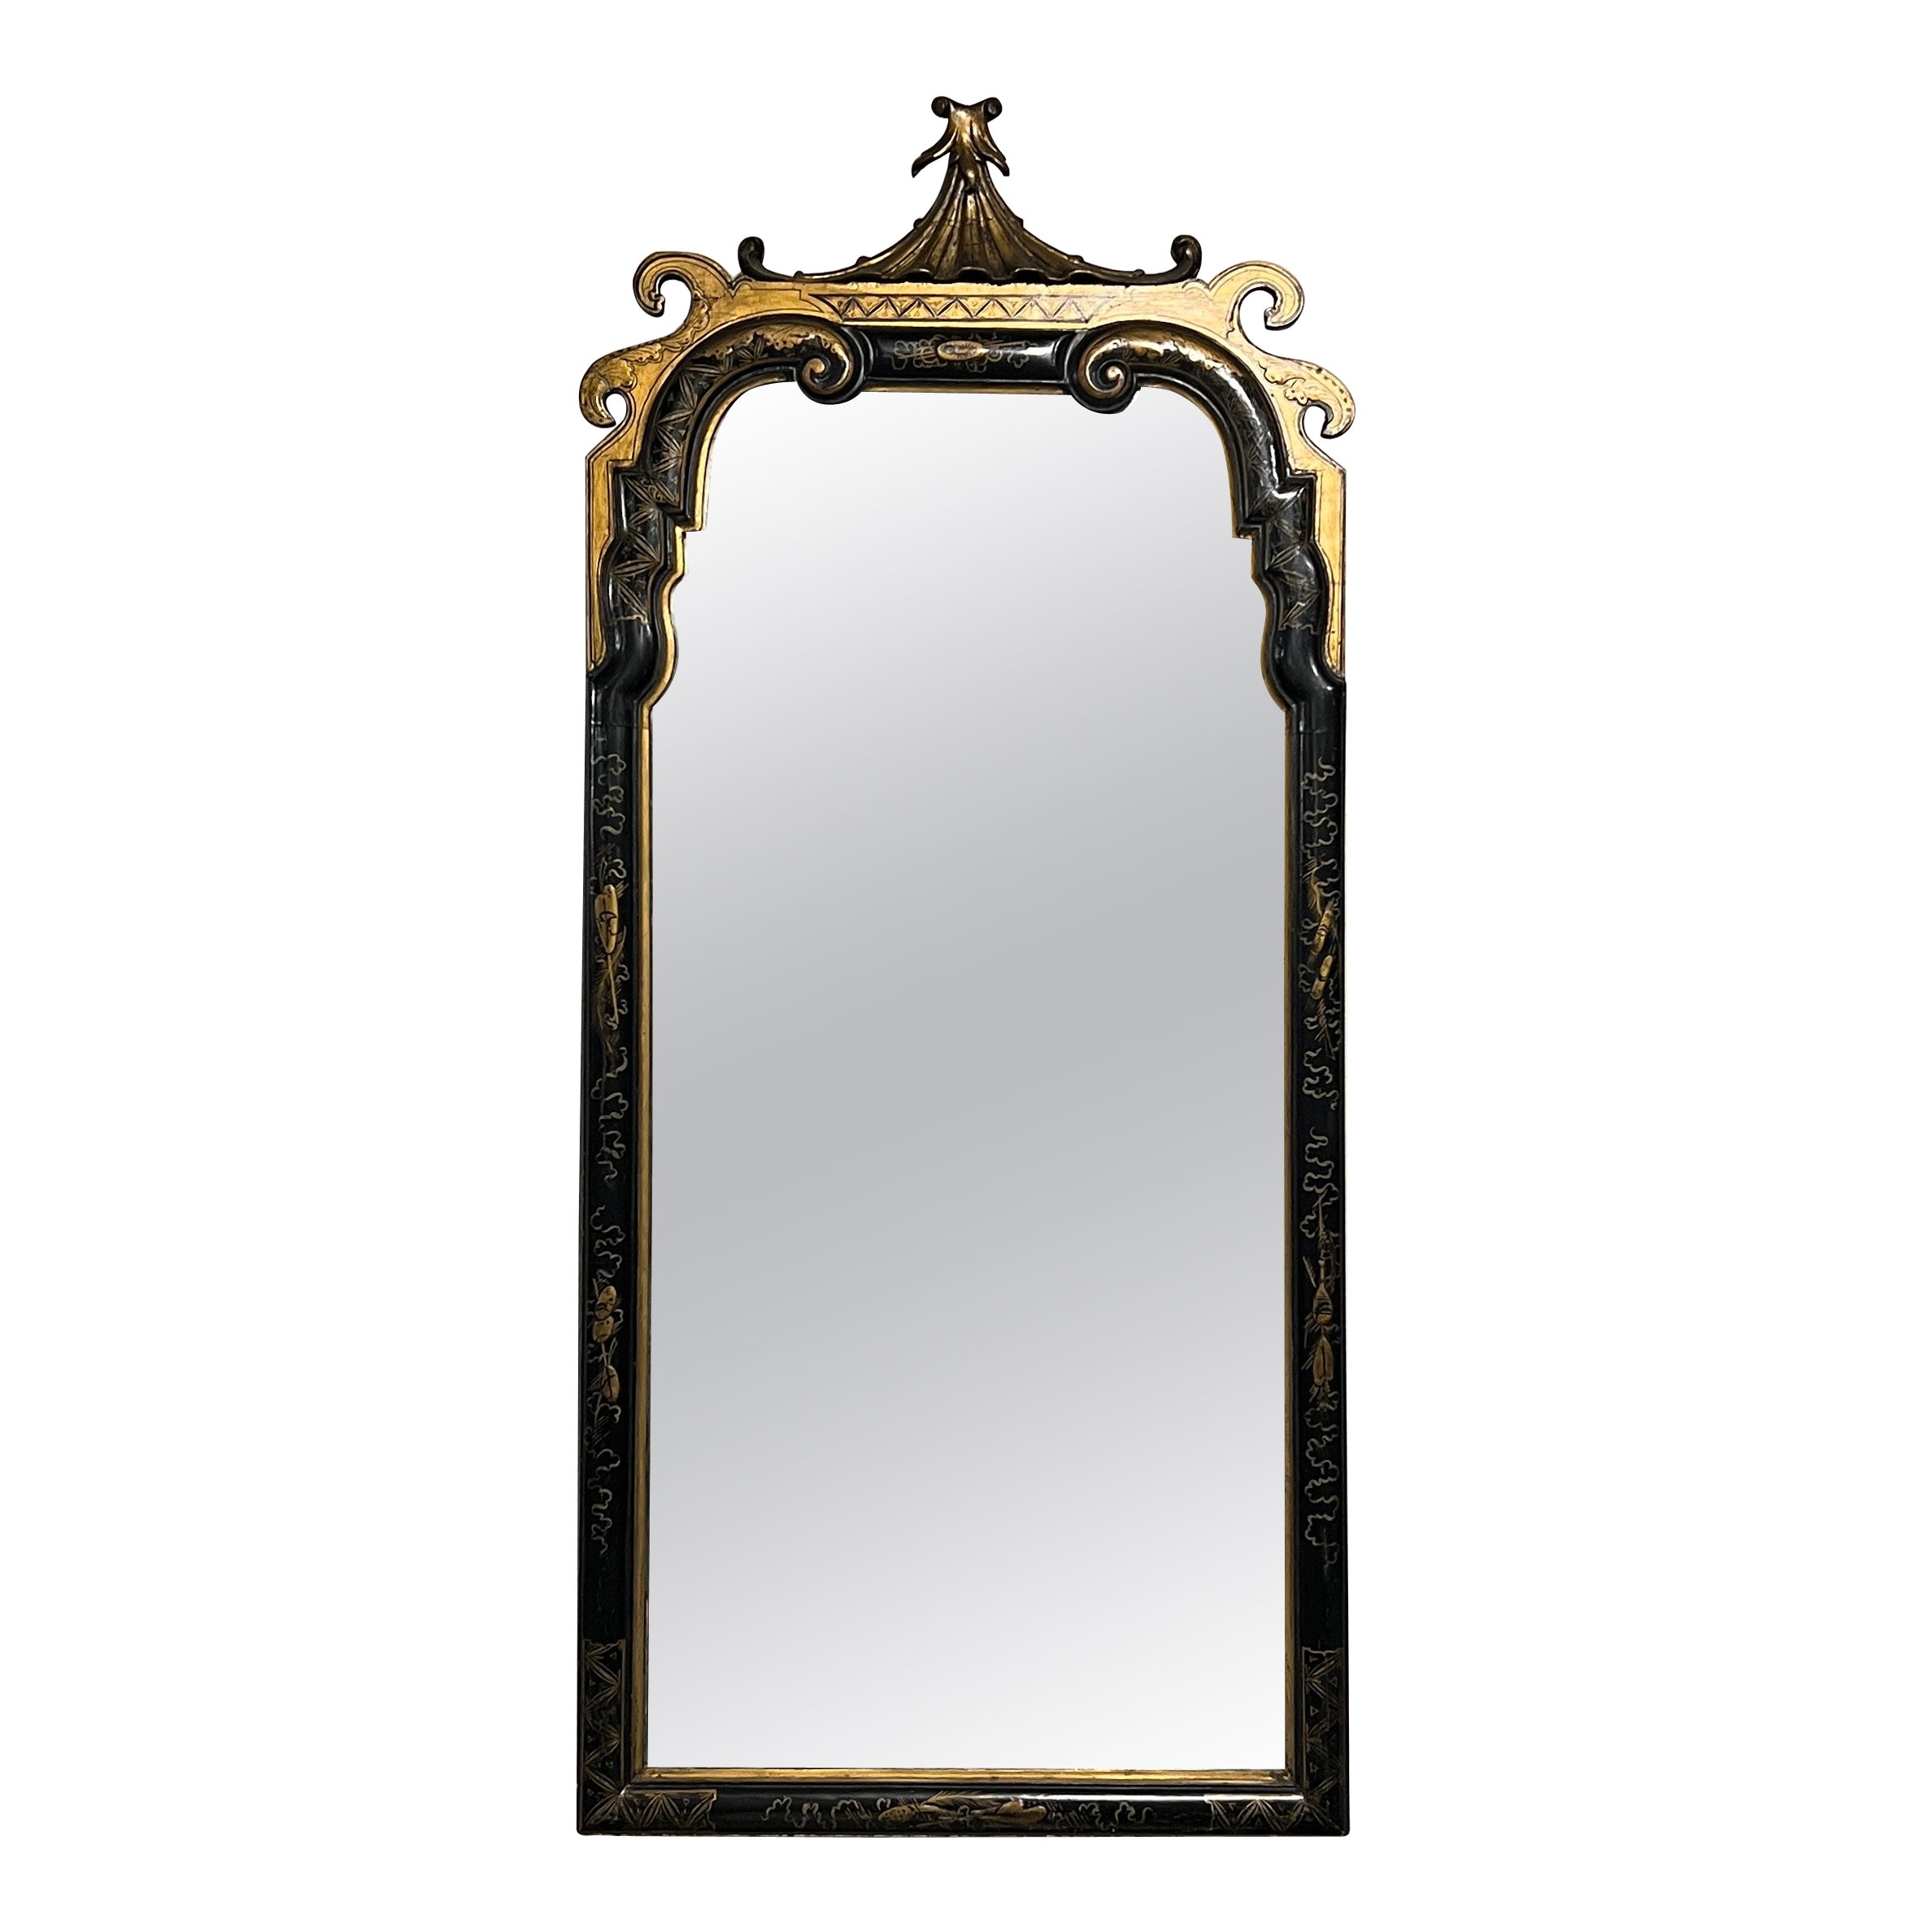 Antique English Chinoiserie Lacquer Mirror, Circa 1890-1910.